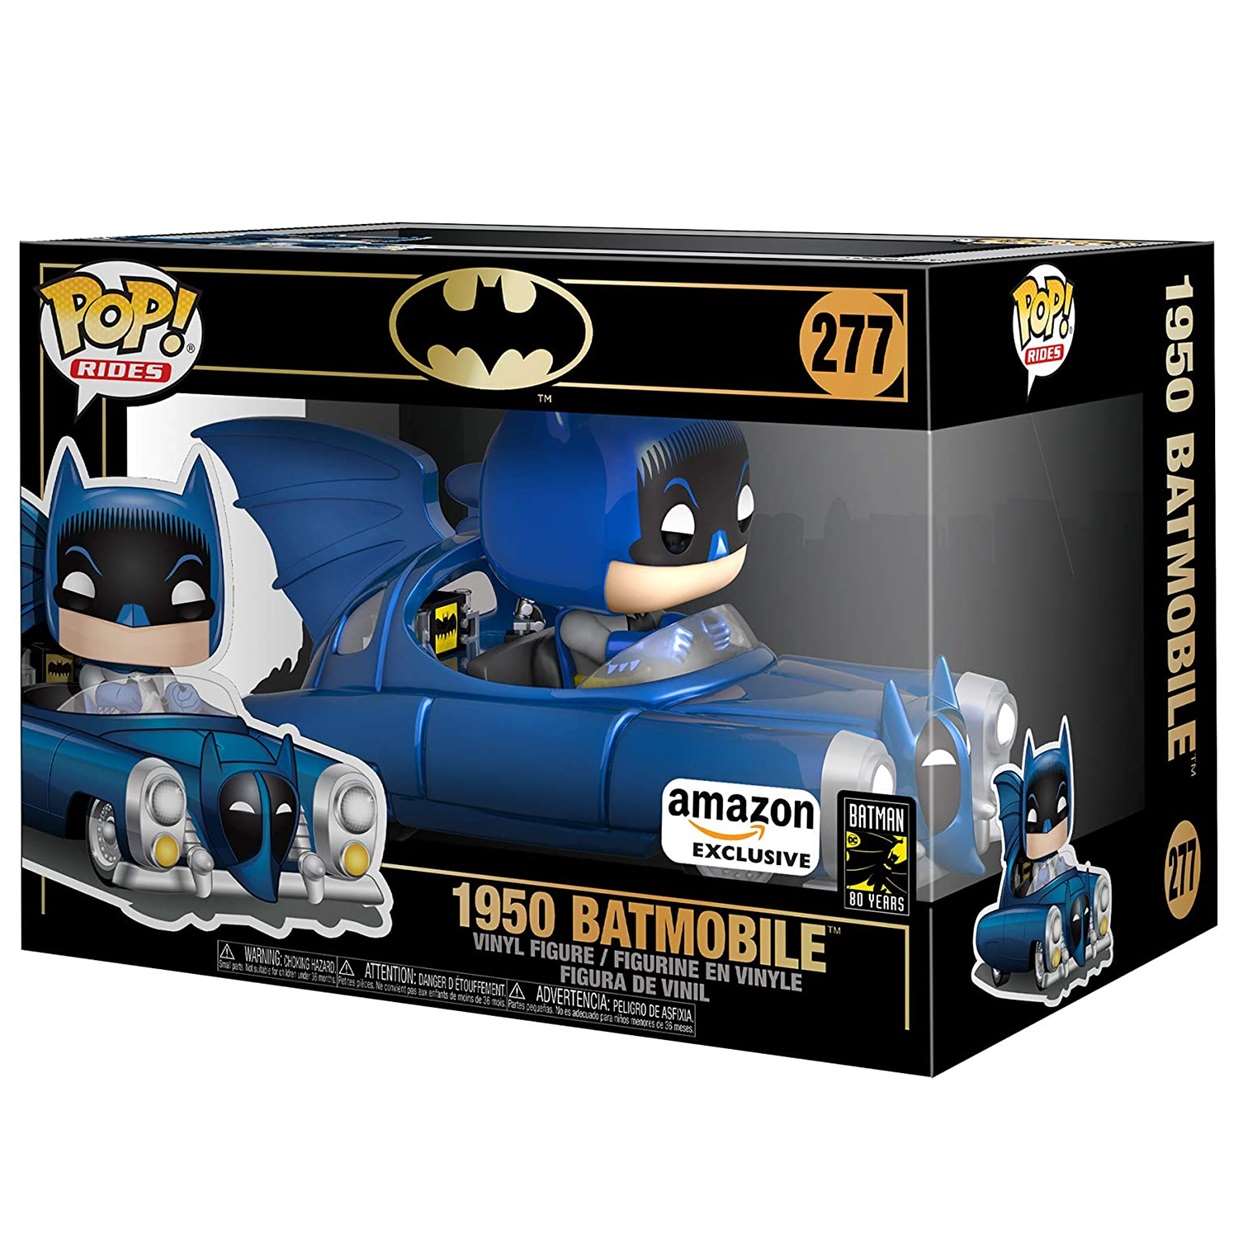 Batman #277 1950 Batmobile Funko Pop! Ride Exclusivo Amazon 